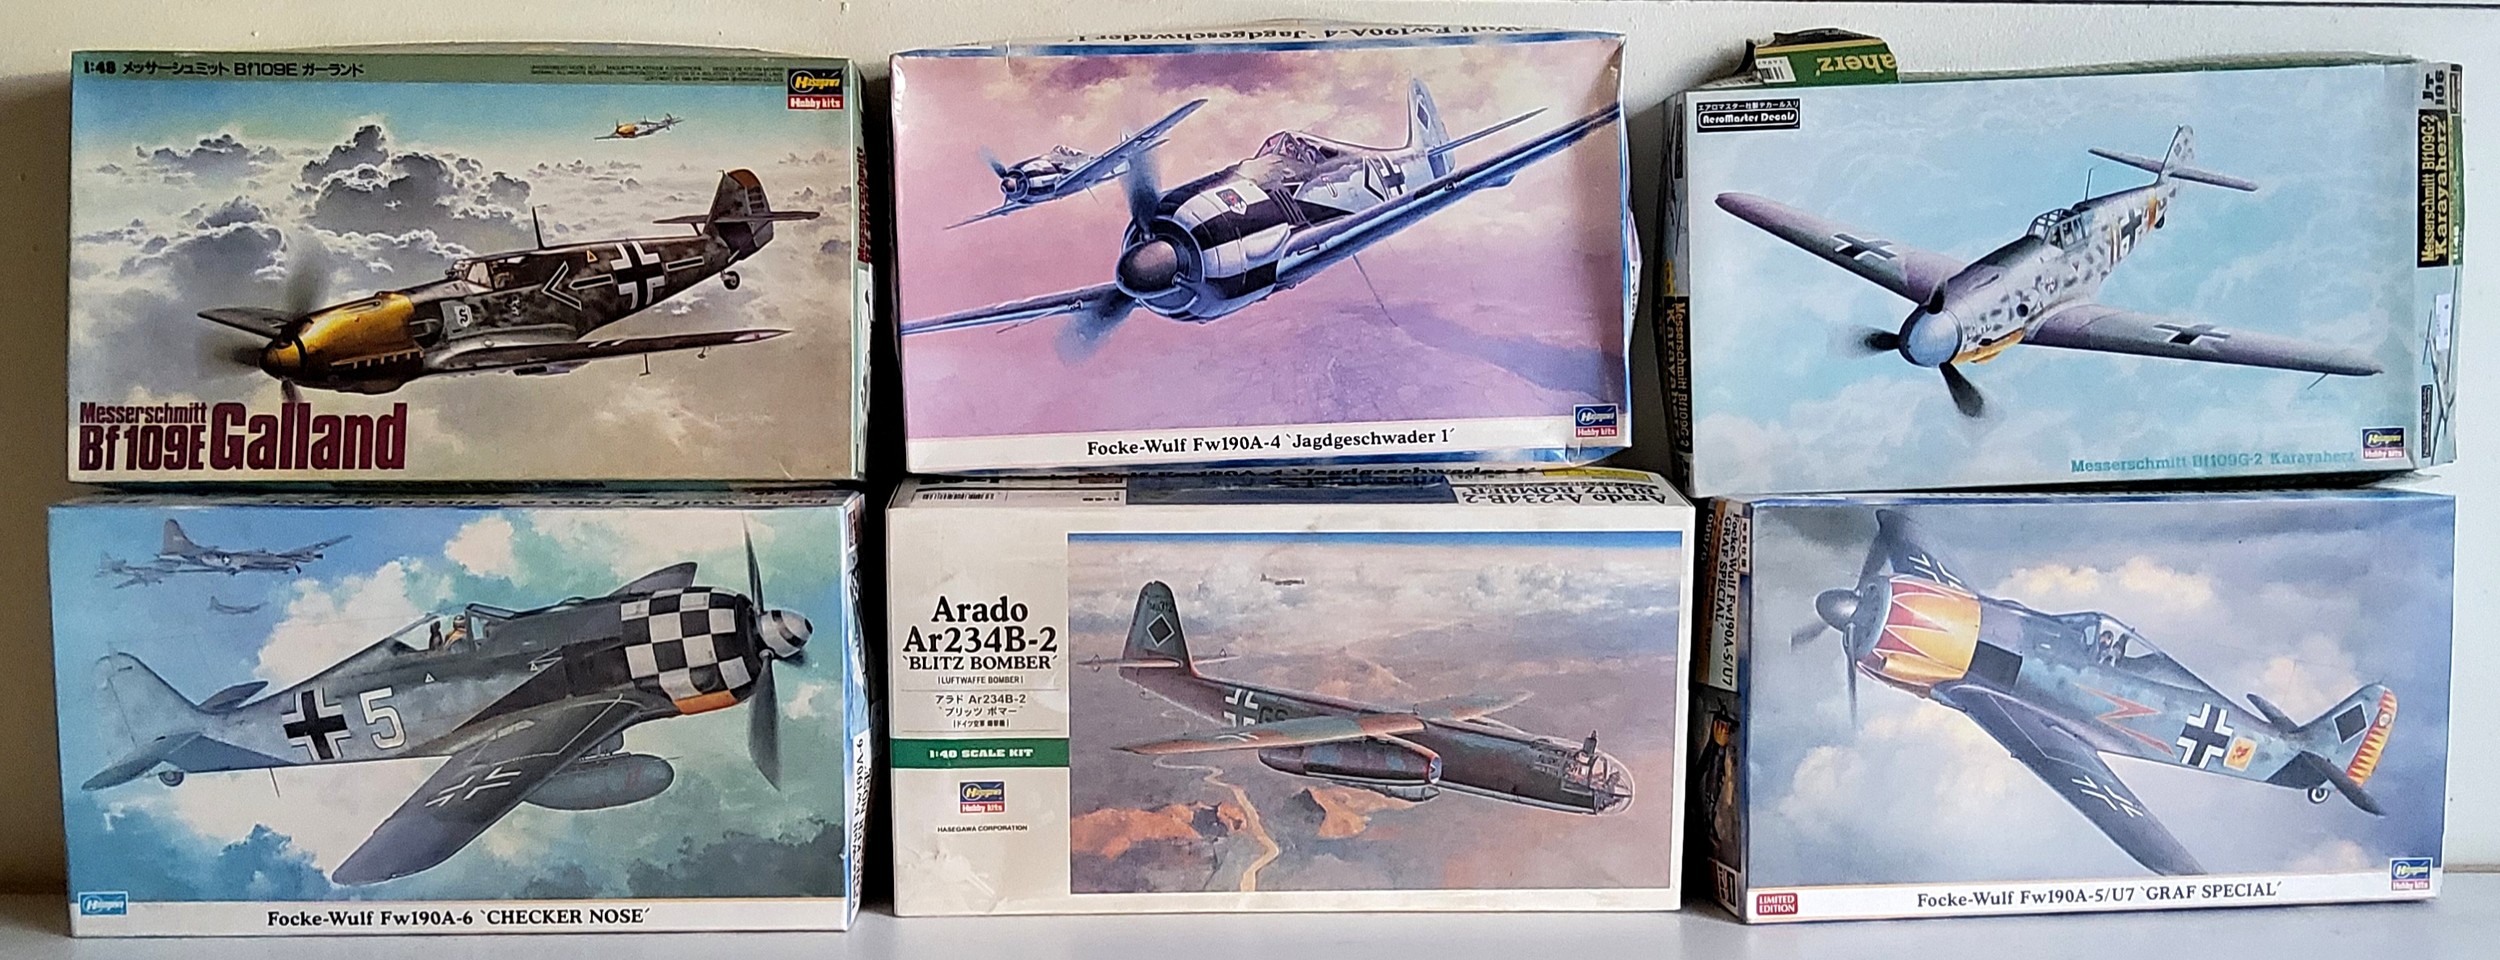 Six boxed Hasegawa Luftwaffe aircraft kits, no09745 Focke-Wulf Fw190A-4, no09976 Focke-Wulf Fw190A-